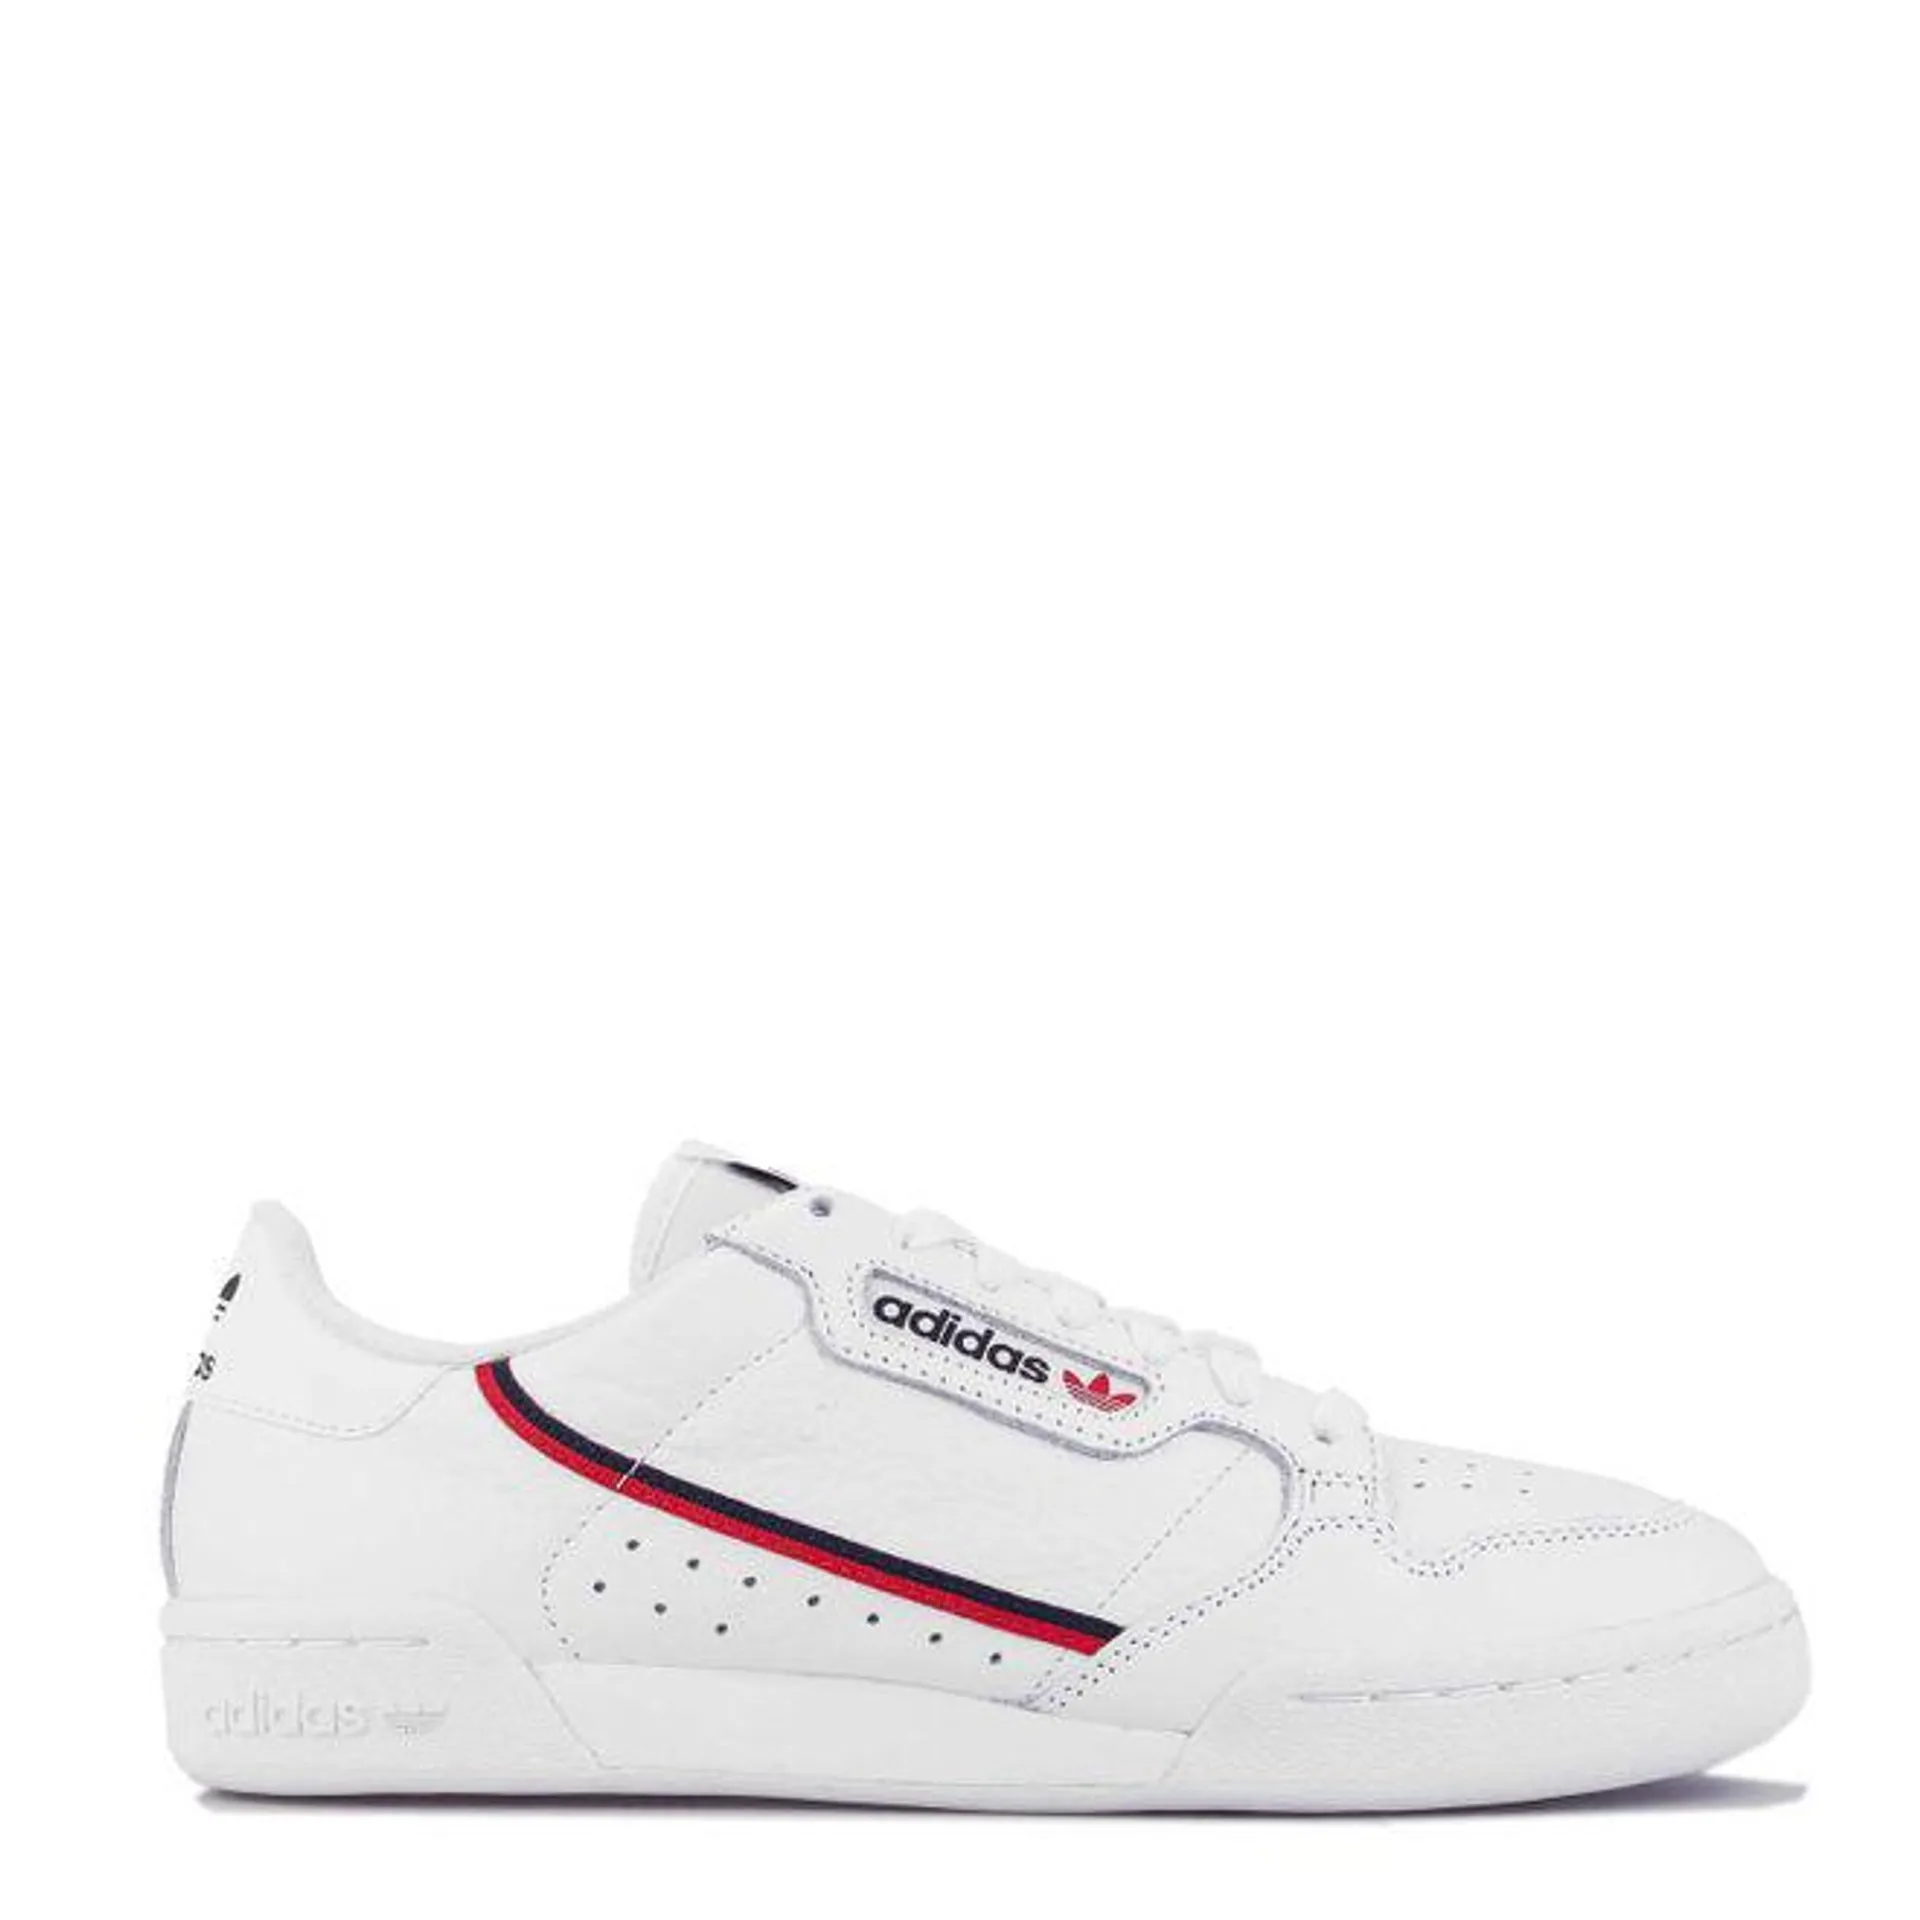 adidas Originals Mens Continental 80 Trainers in White